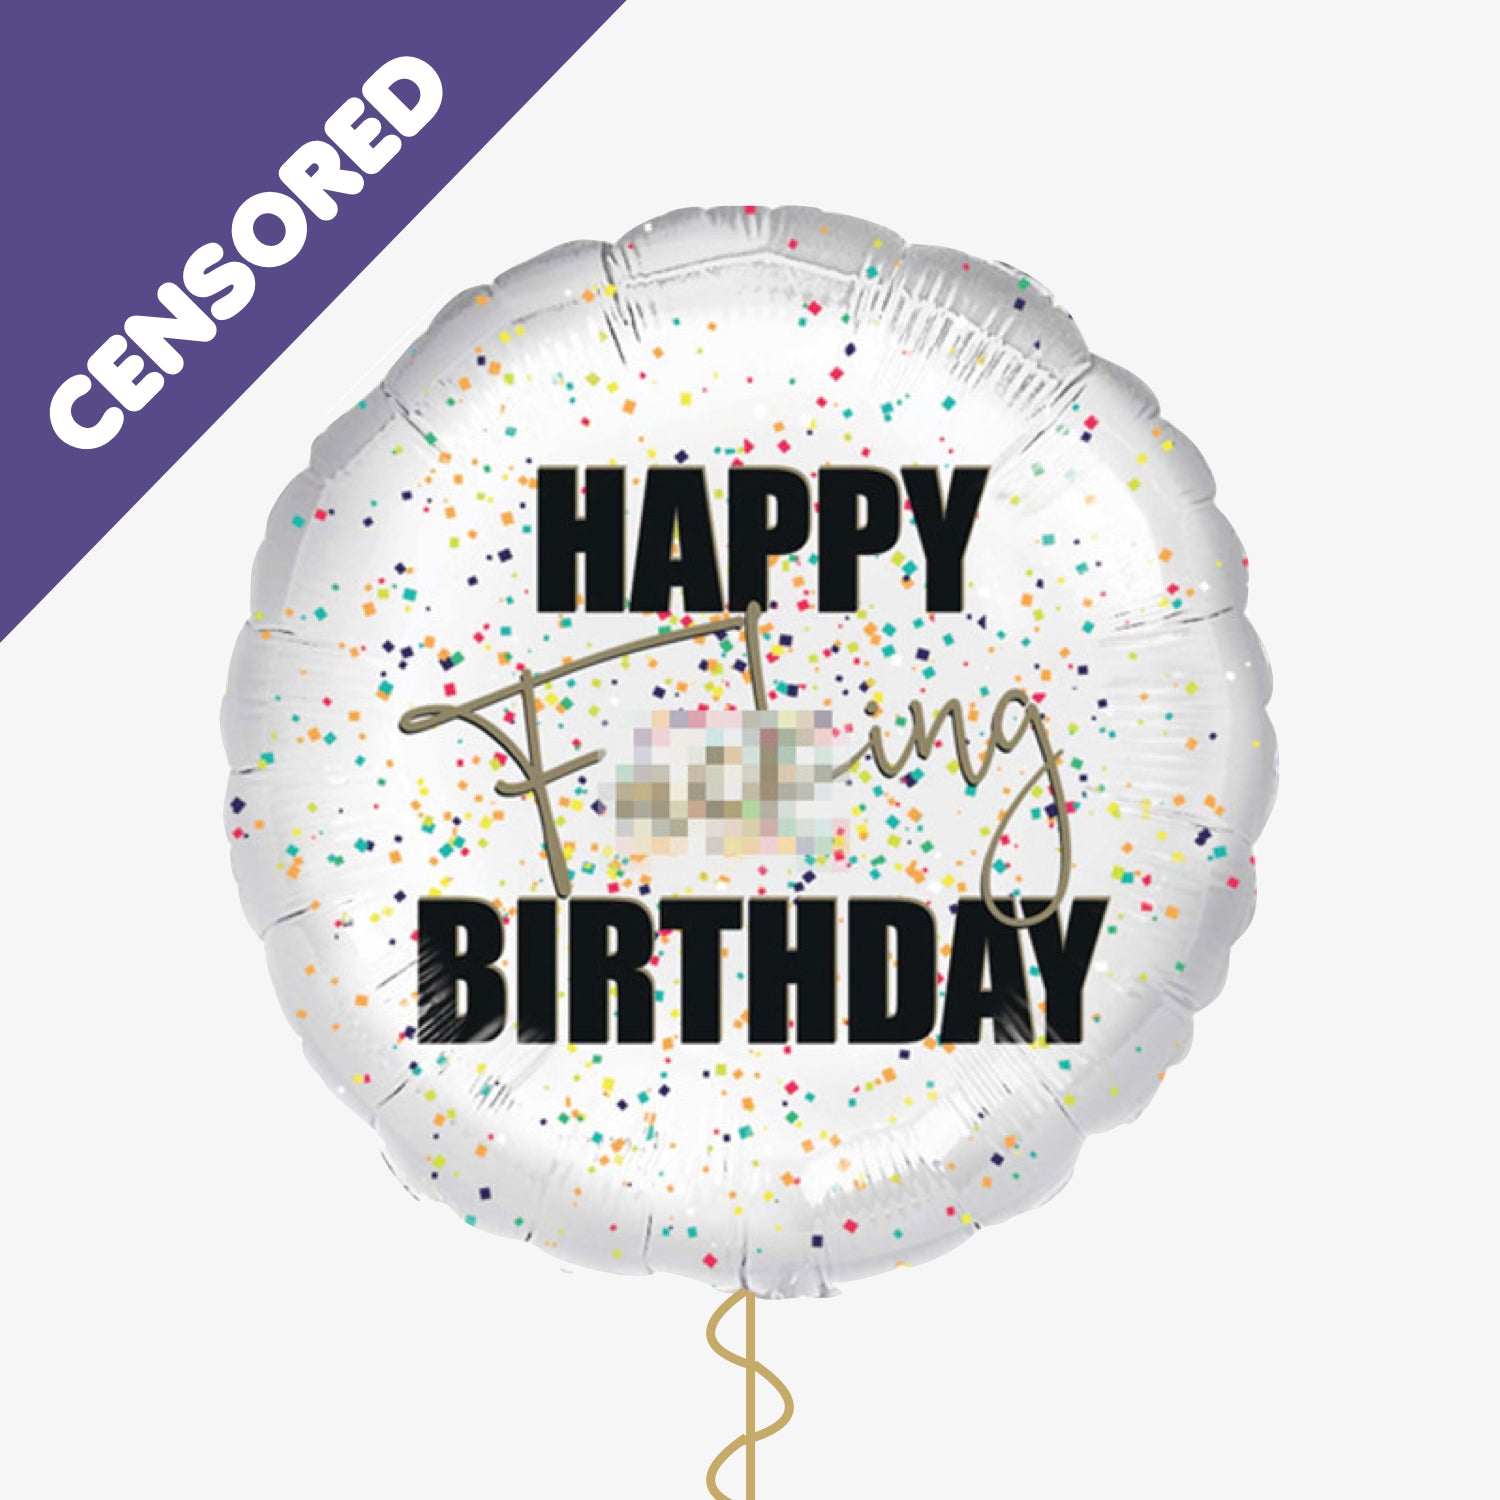 Happy F***ing Birthday Balloon